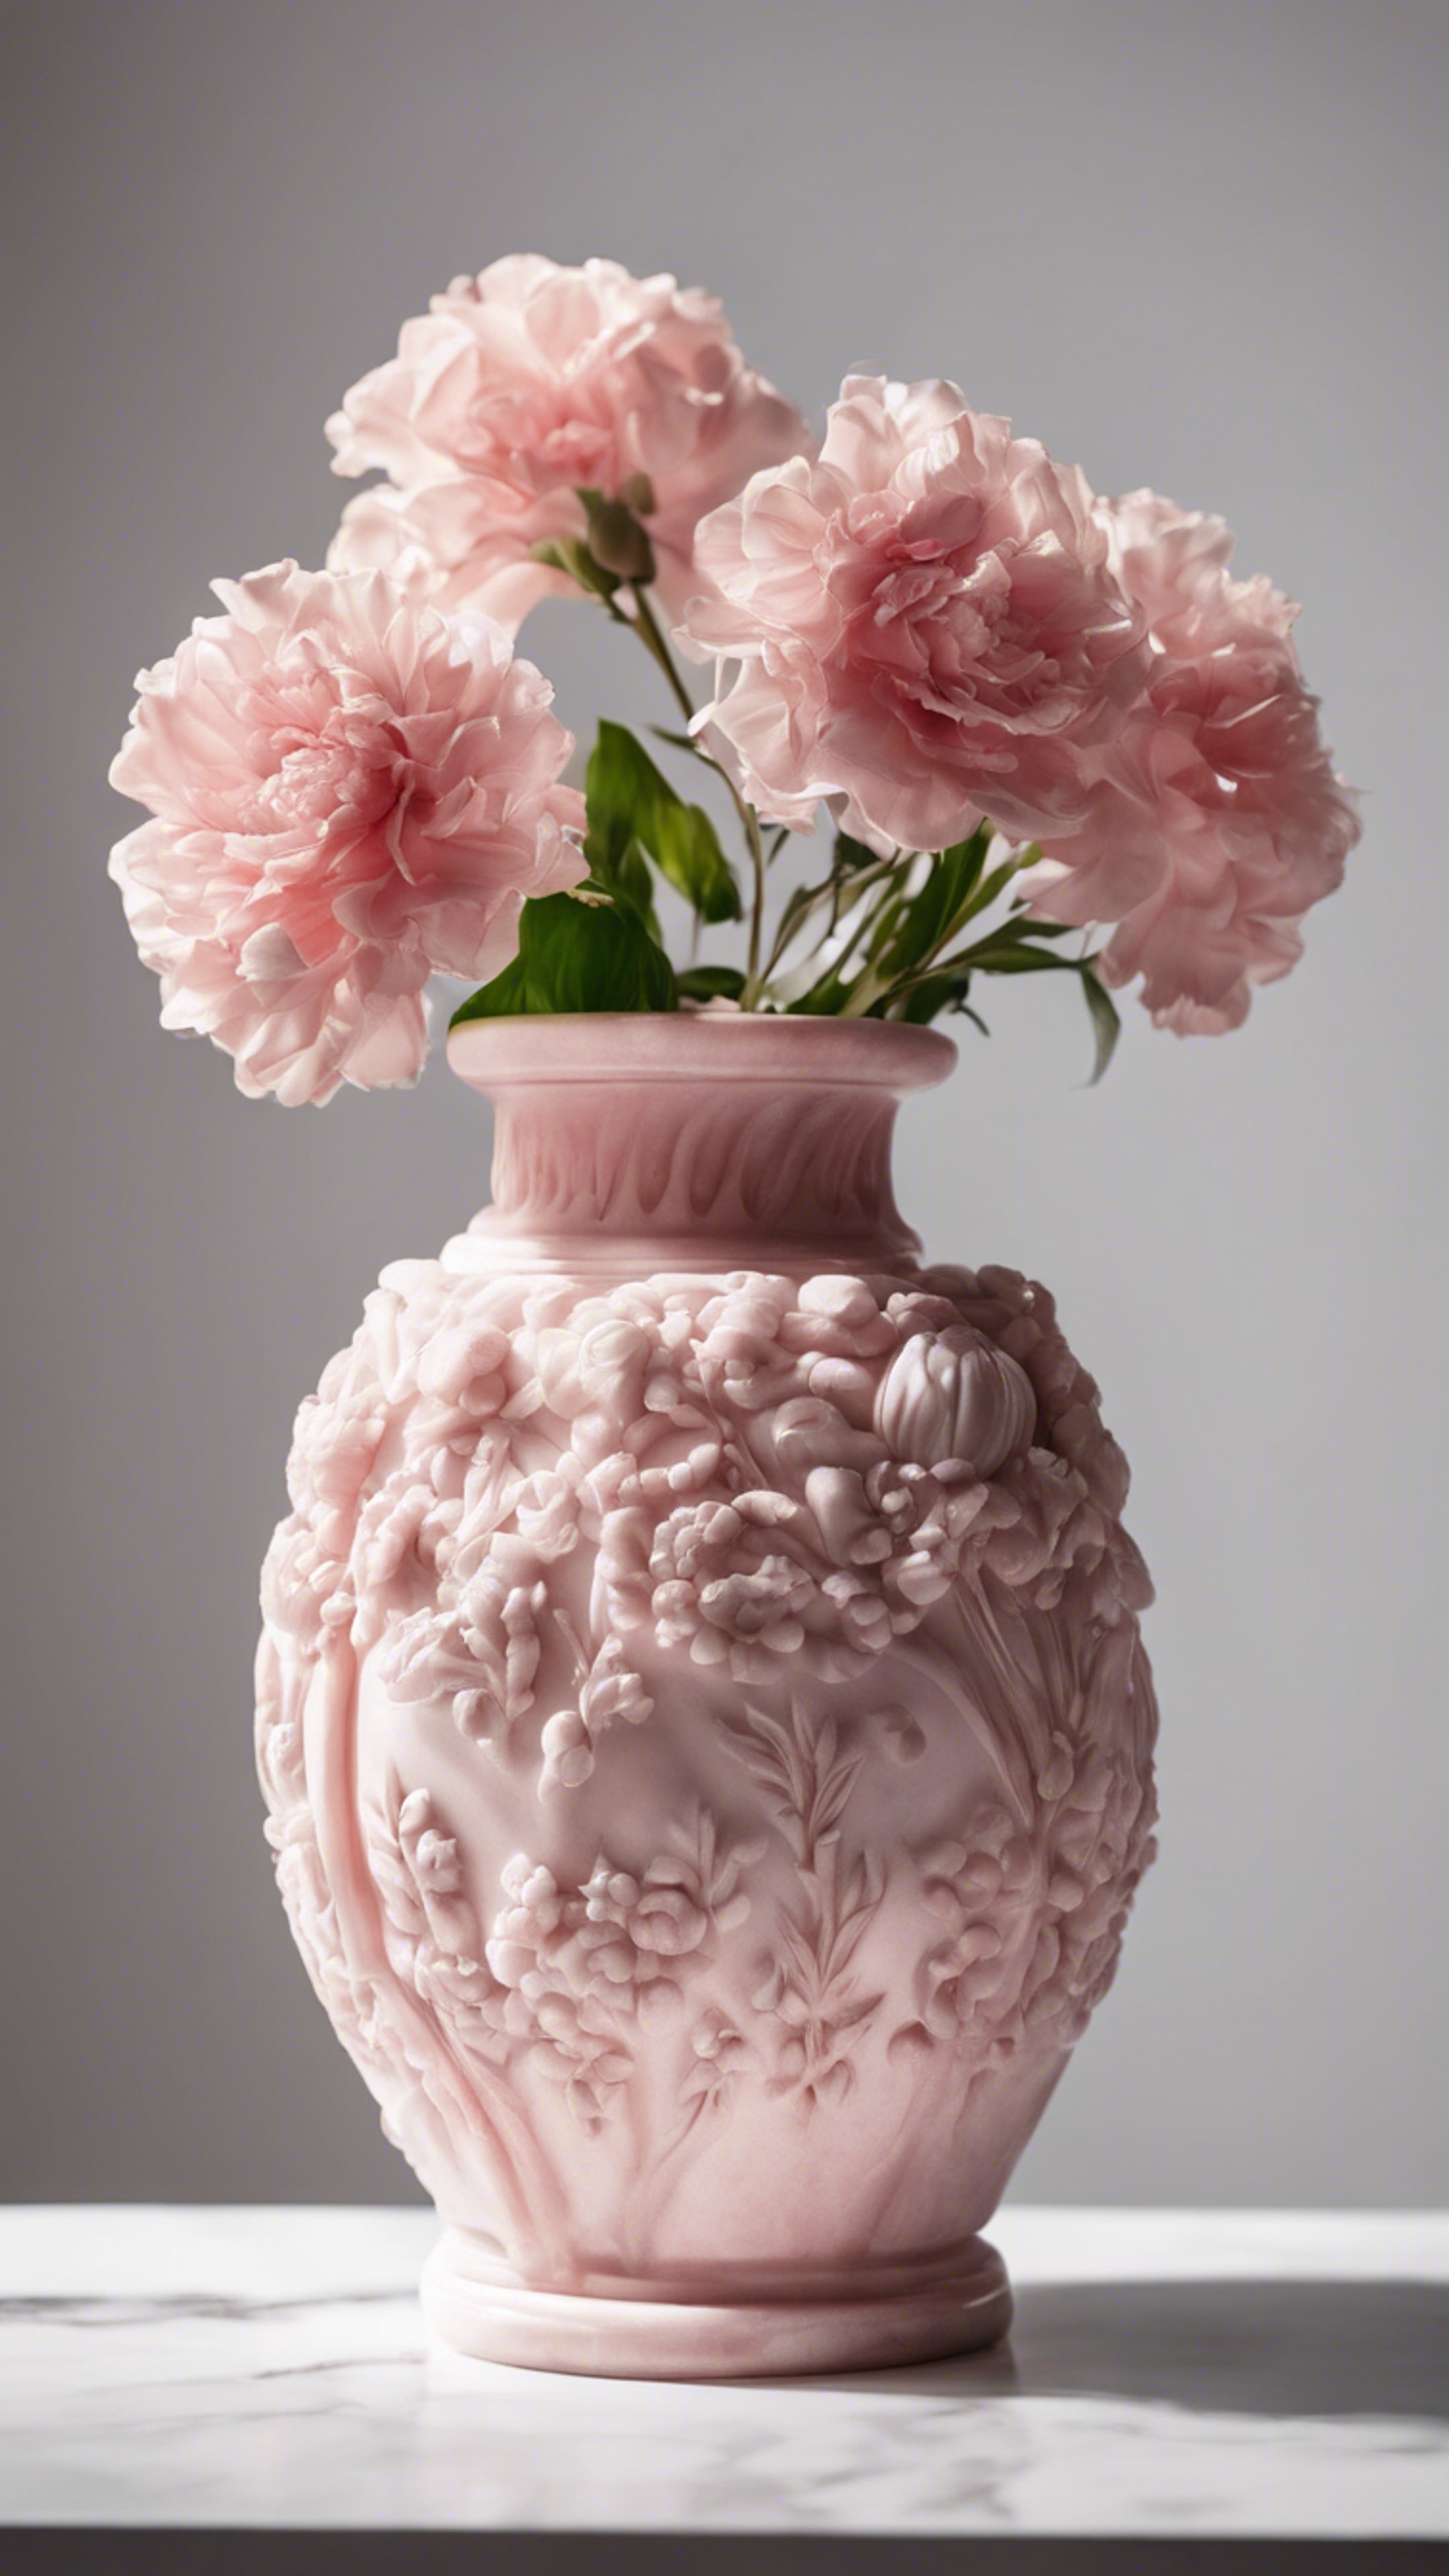 Elegantly carved pink marble flower vase against a white background. Tapeta[b14a0bd2340d44aeb9d9]